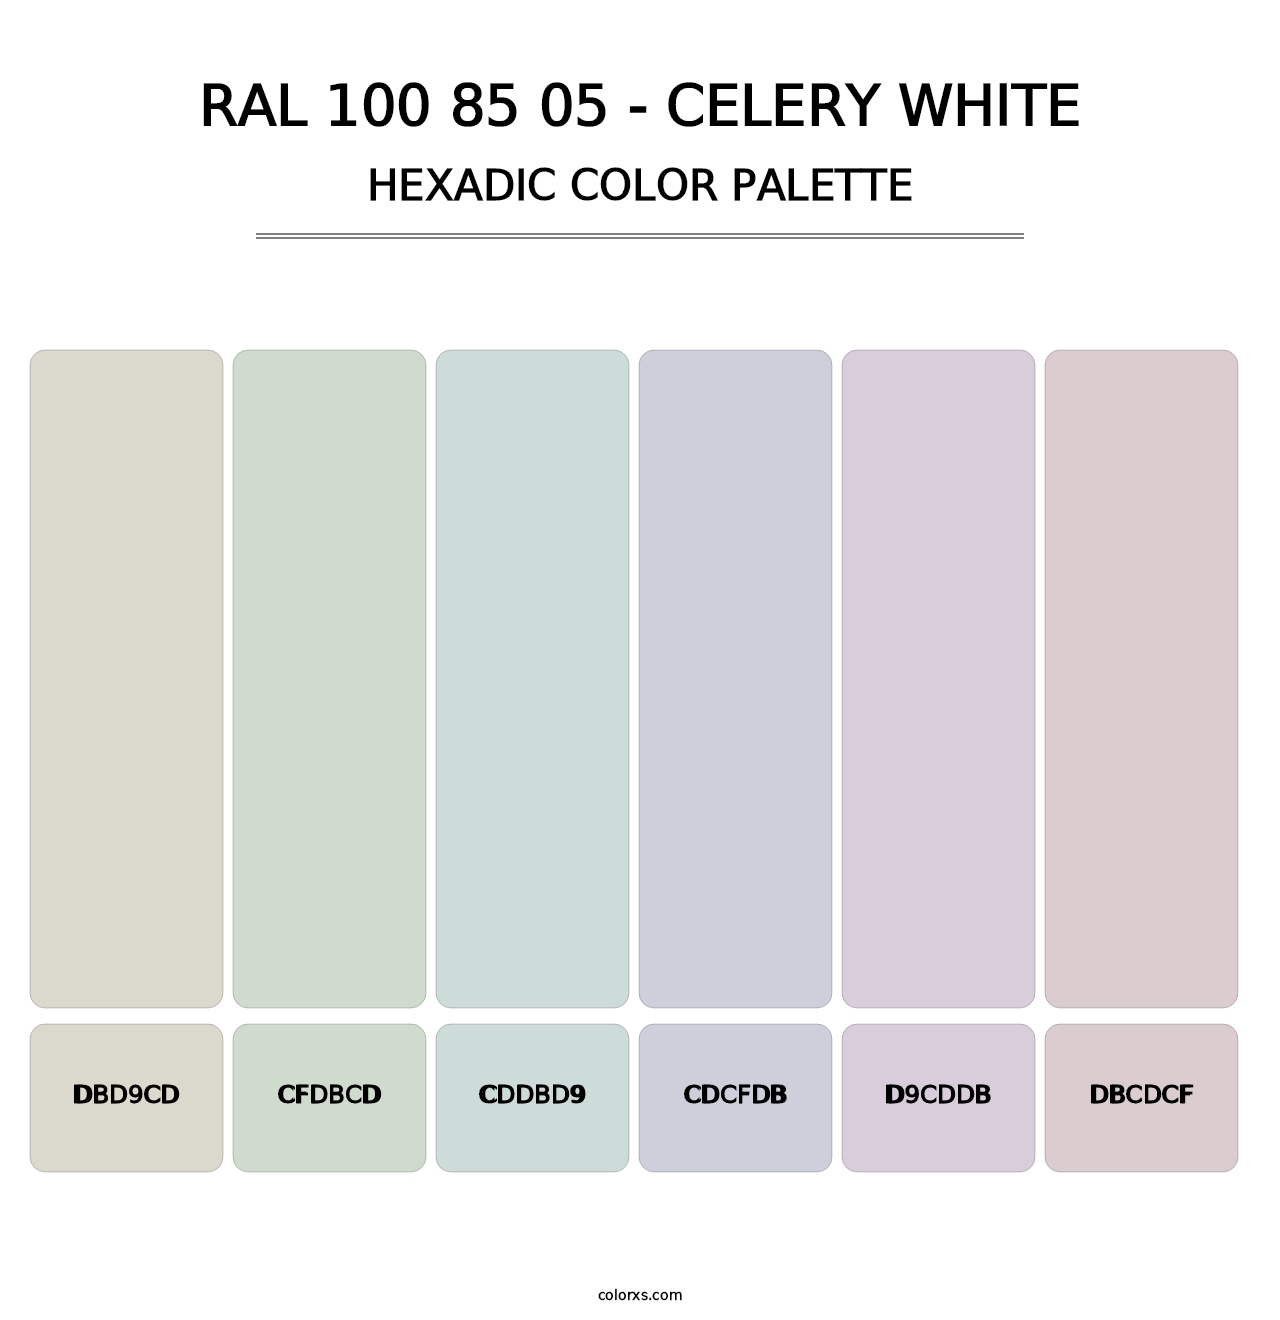 RAL 100 85 05 - Celery White - Hexadic Color Palette